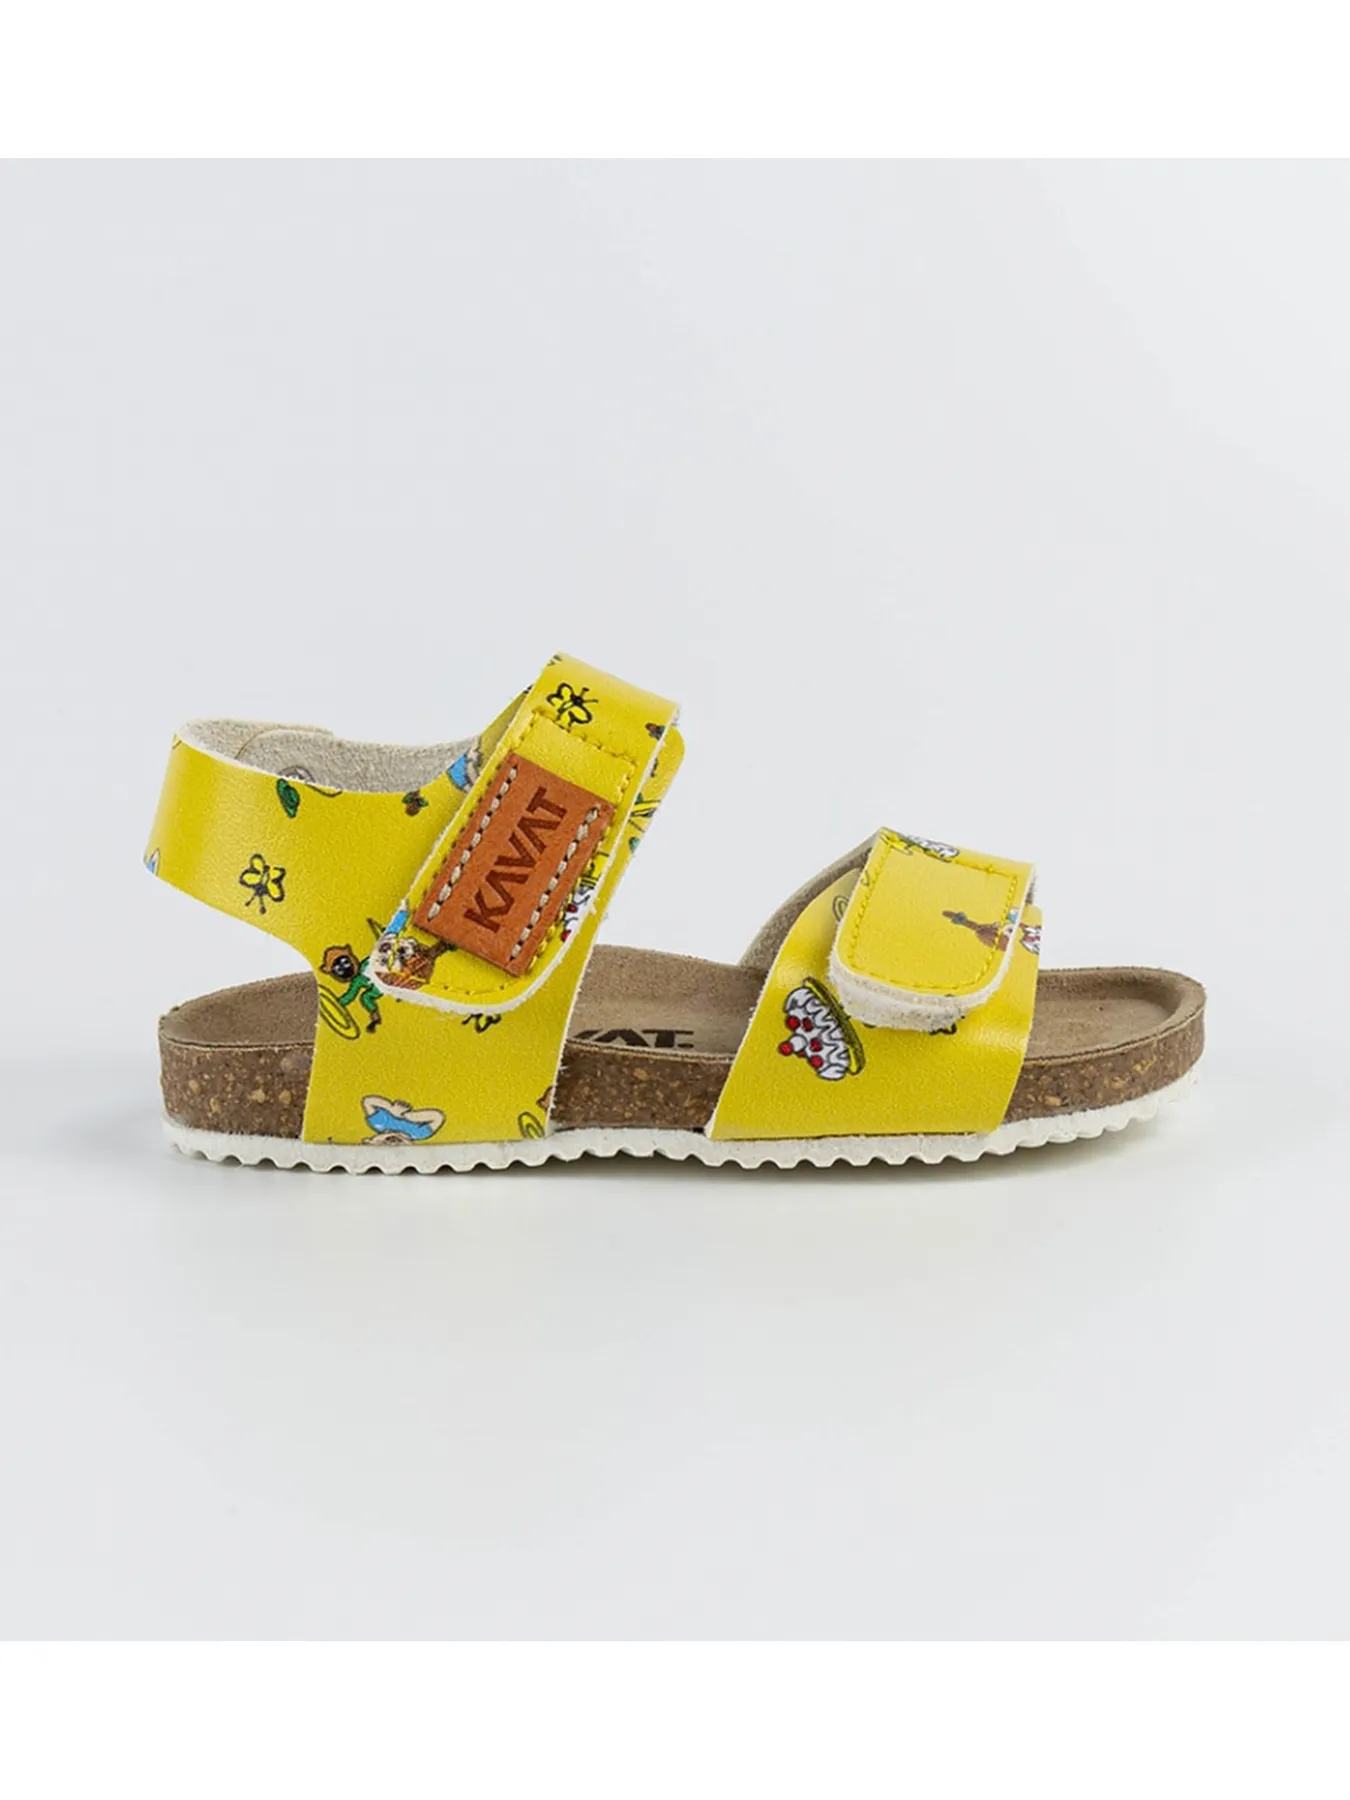 Sandals Pippi Longstocking - Yellow